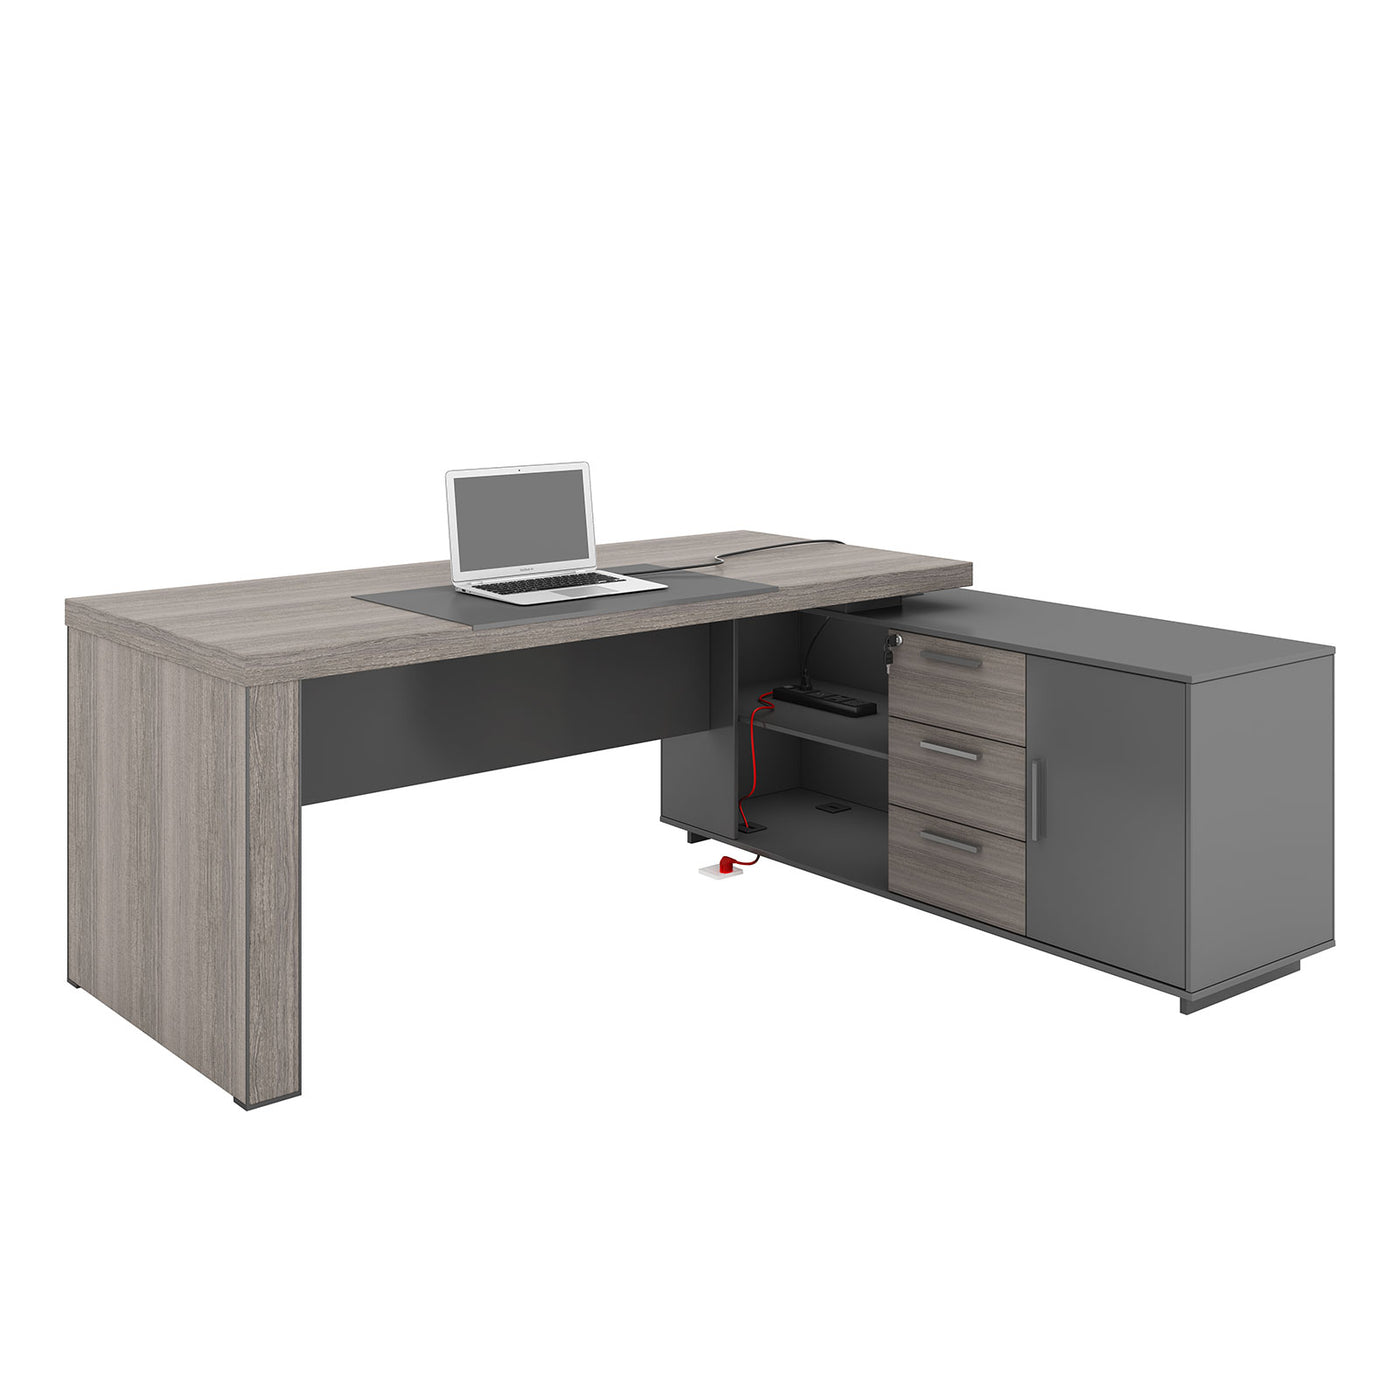 3 Drawer L-Shape Executive Desk LI-163